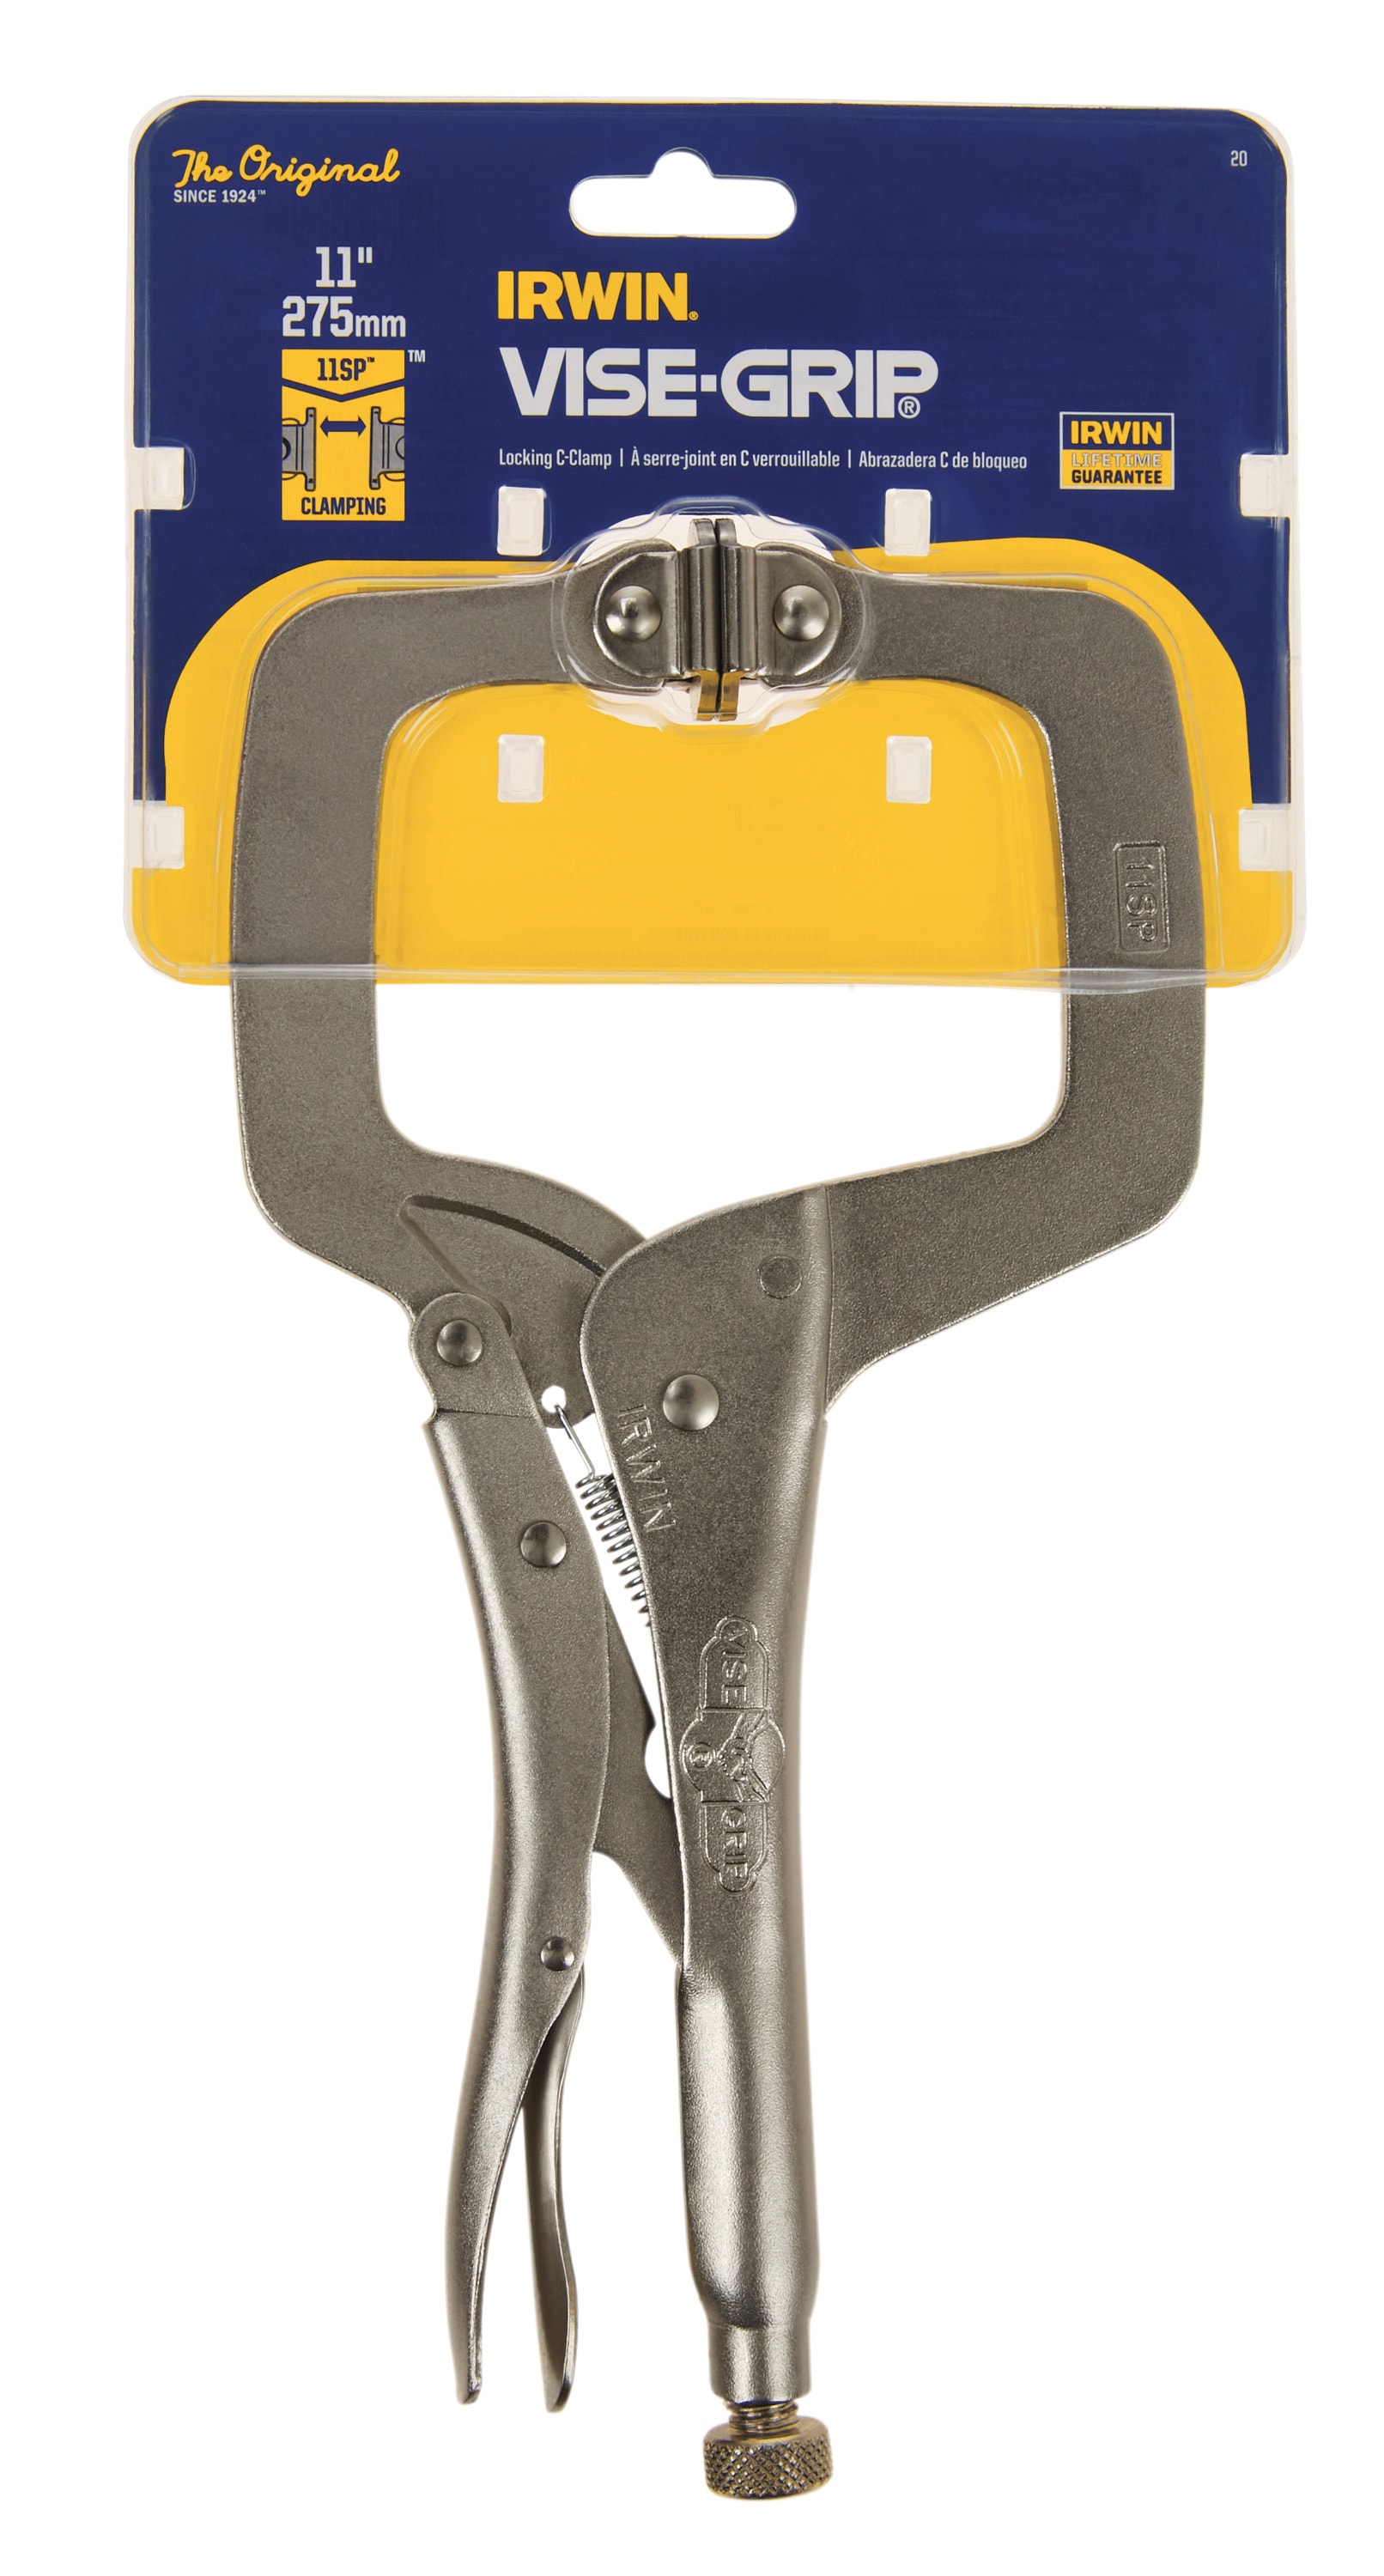 IRWIN Vise-Grips - 9 The Original Locking Welding Clamp Pliers